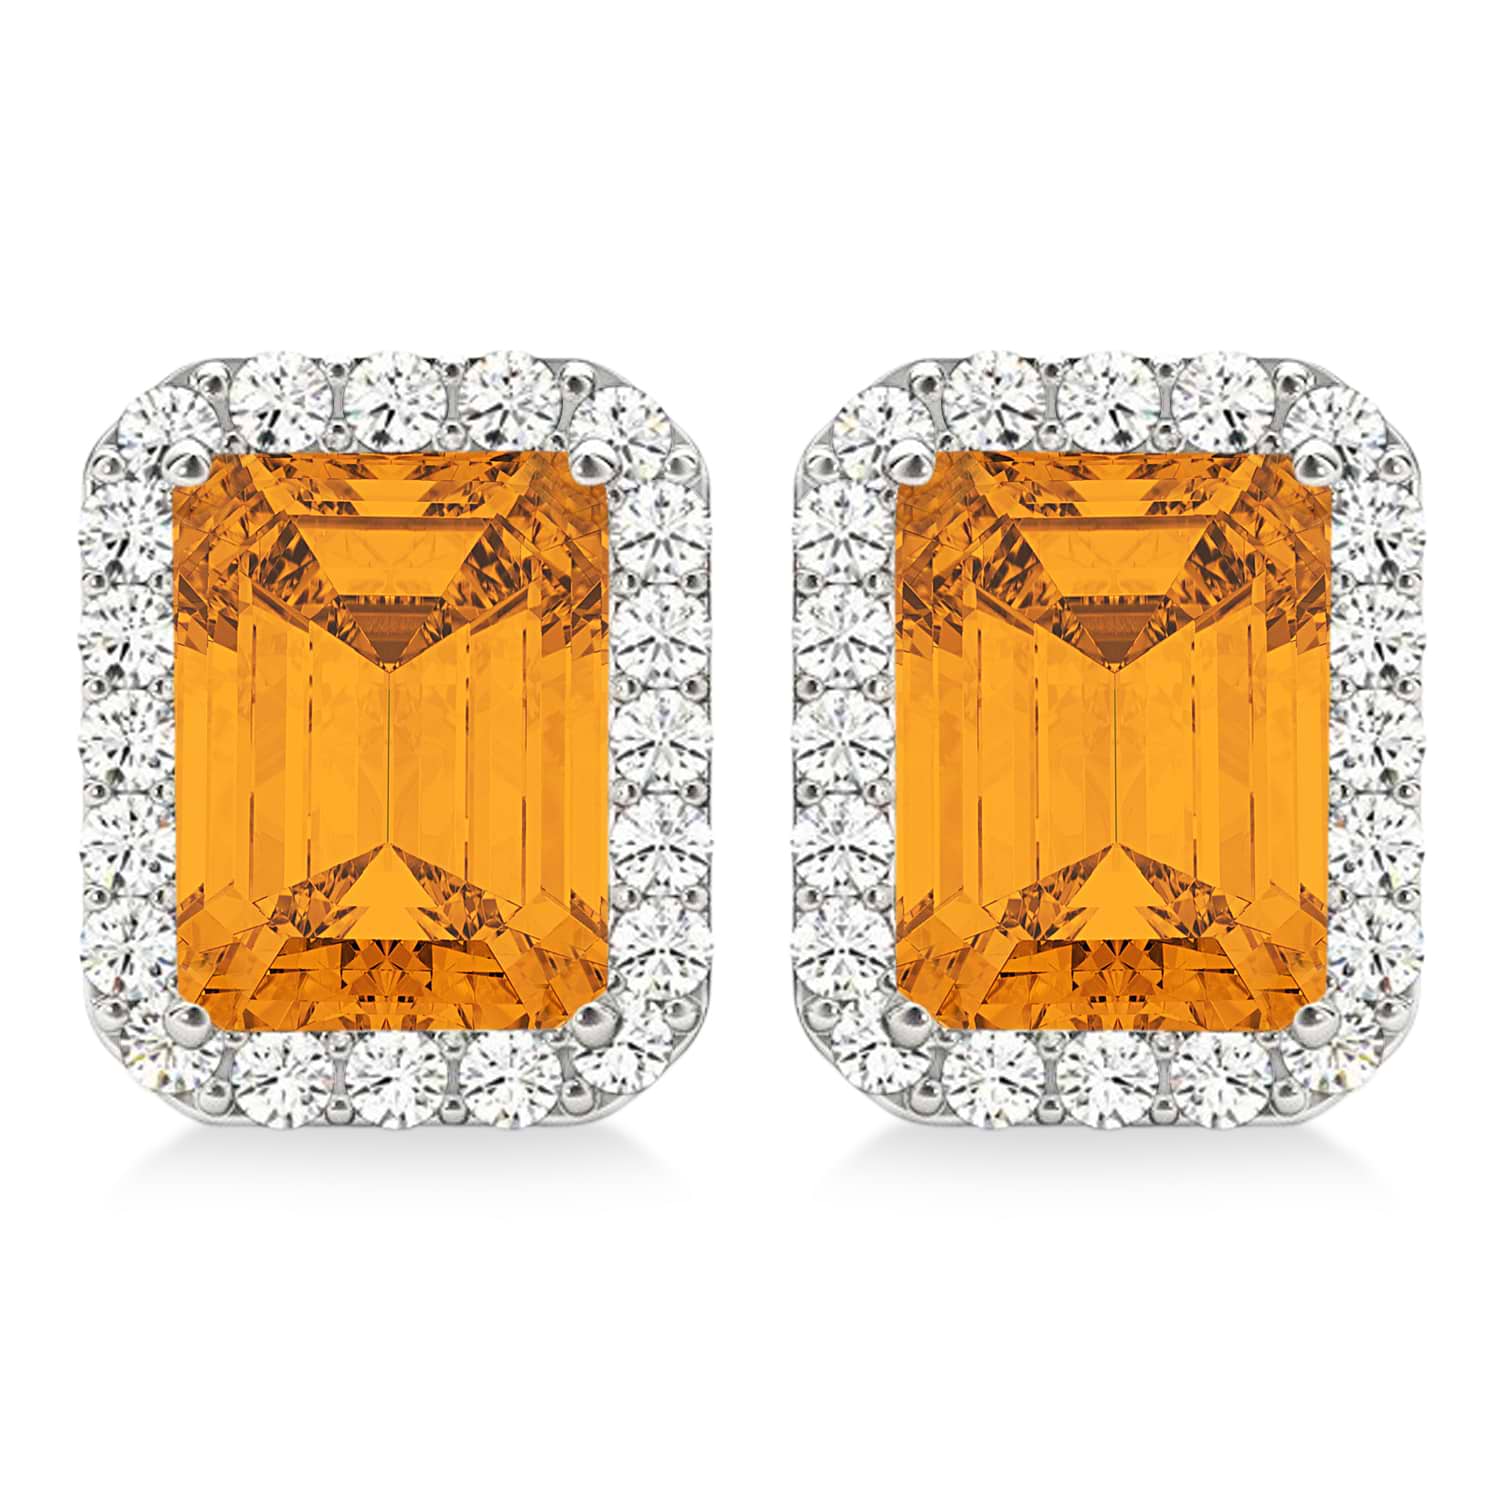 Emerald Cut Citrine & Diamond Halo Earrings 14k White Gold (2.30ct)